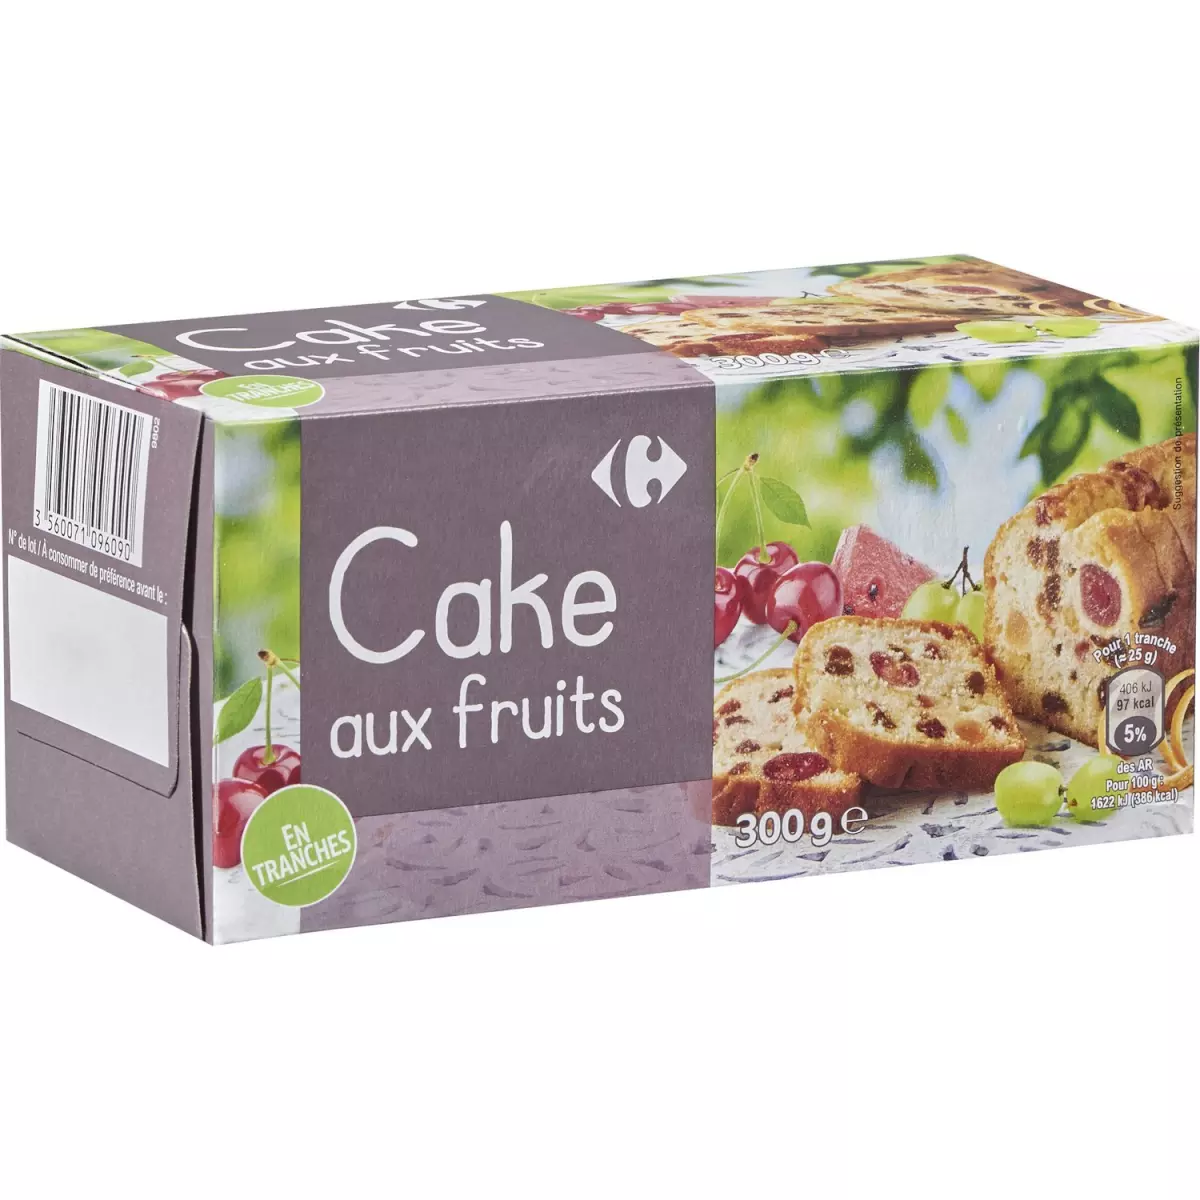 CAKE AUX FRUITS PQ 300 GR CARREFOUR